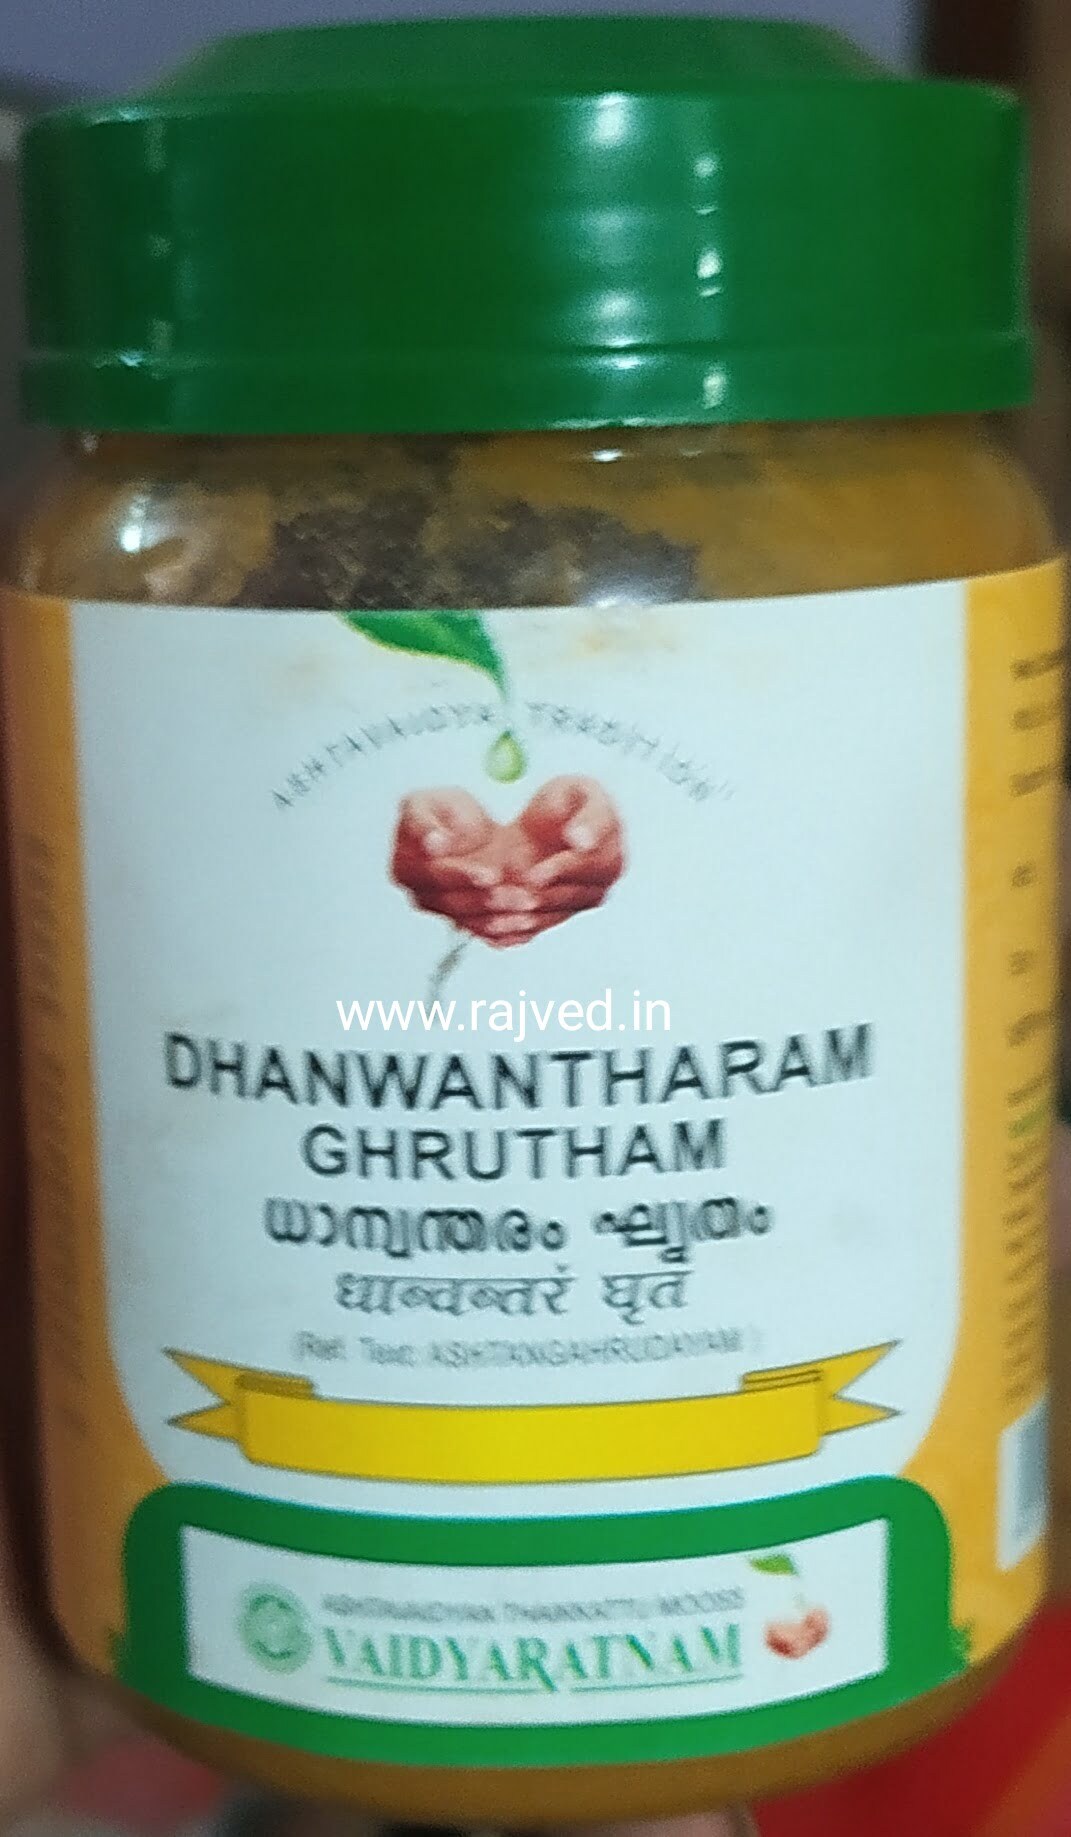 dhanwantharam ghrutham 150 gm upto 20% off vaidyaratnam oushadhashala